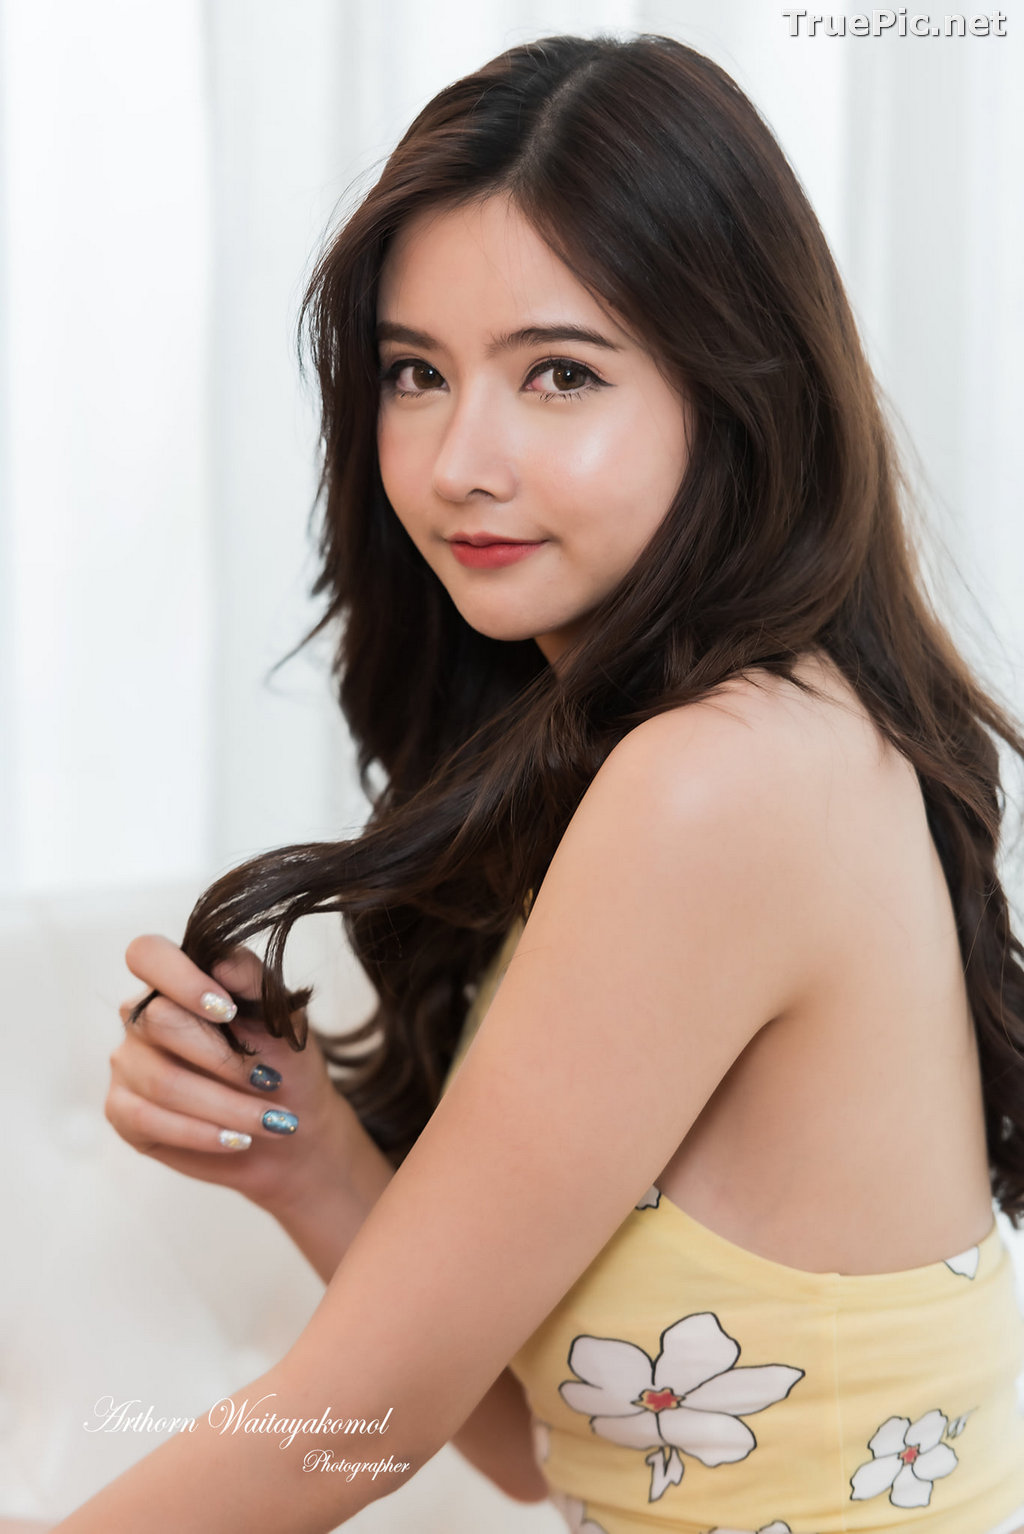 Image Thailand Model - Aintoaon Nantawong - Sweet Girl Photo - TruePic.net - Picture-11